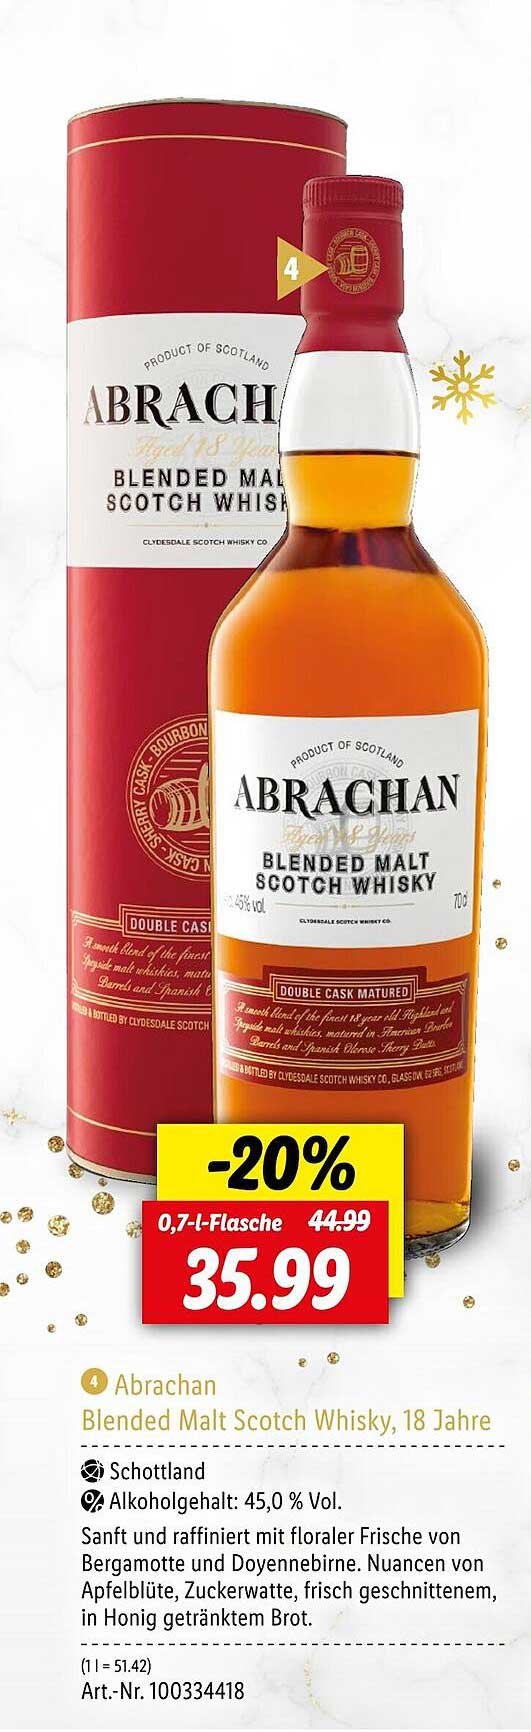 Abrachan Blended Malt Scotch Whisky, Lidl Angebot 18 bei Jahre